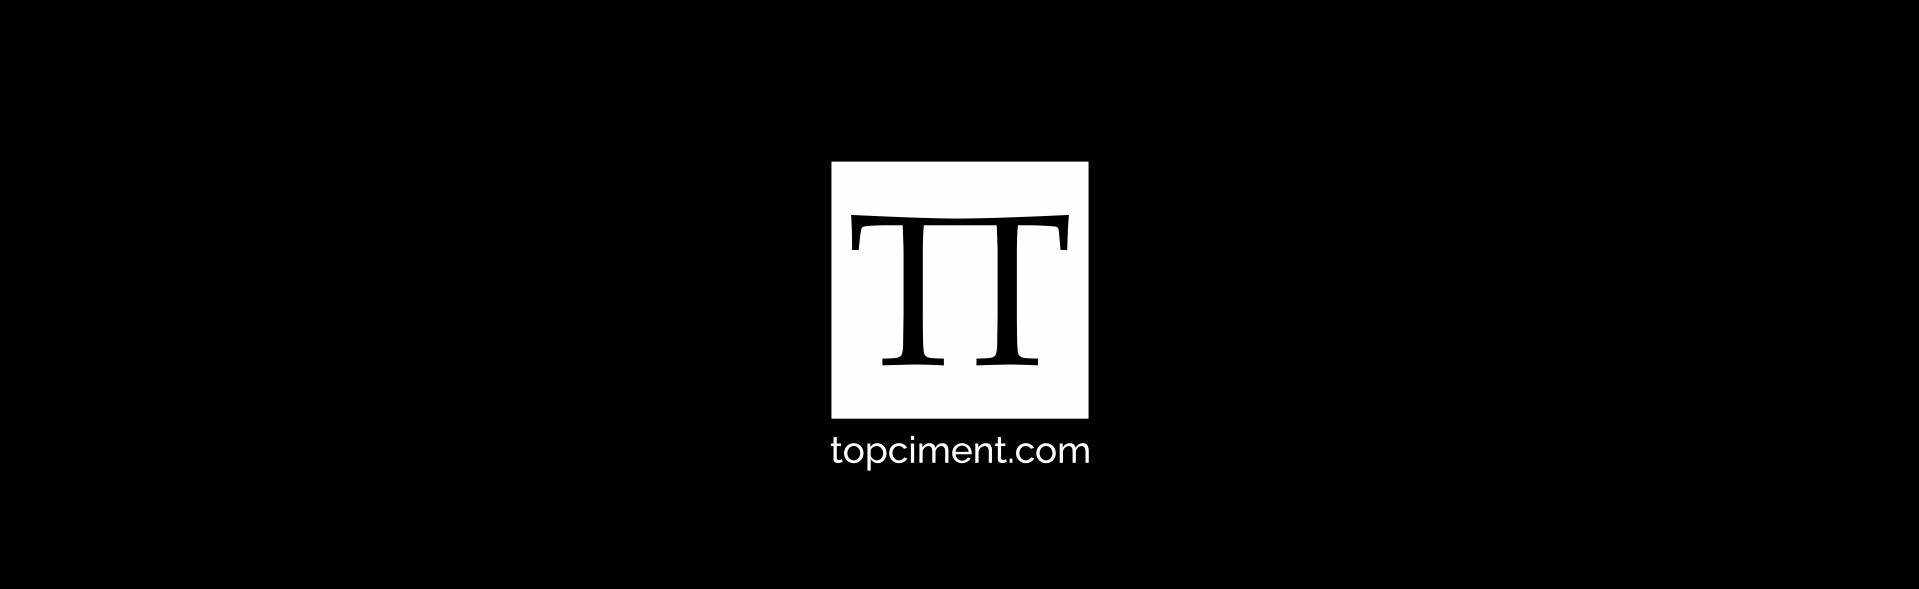 Topciment logo on black background